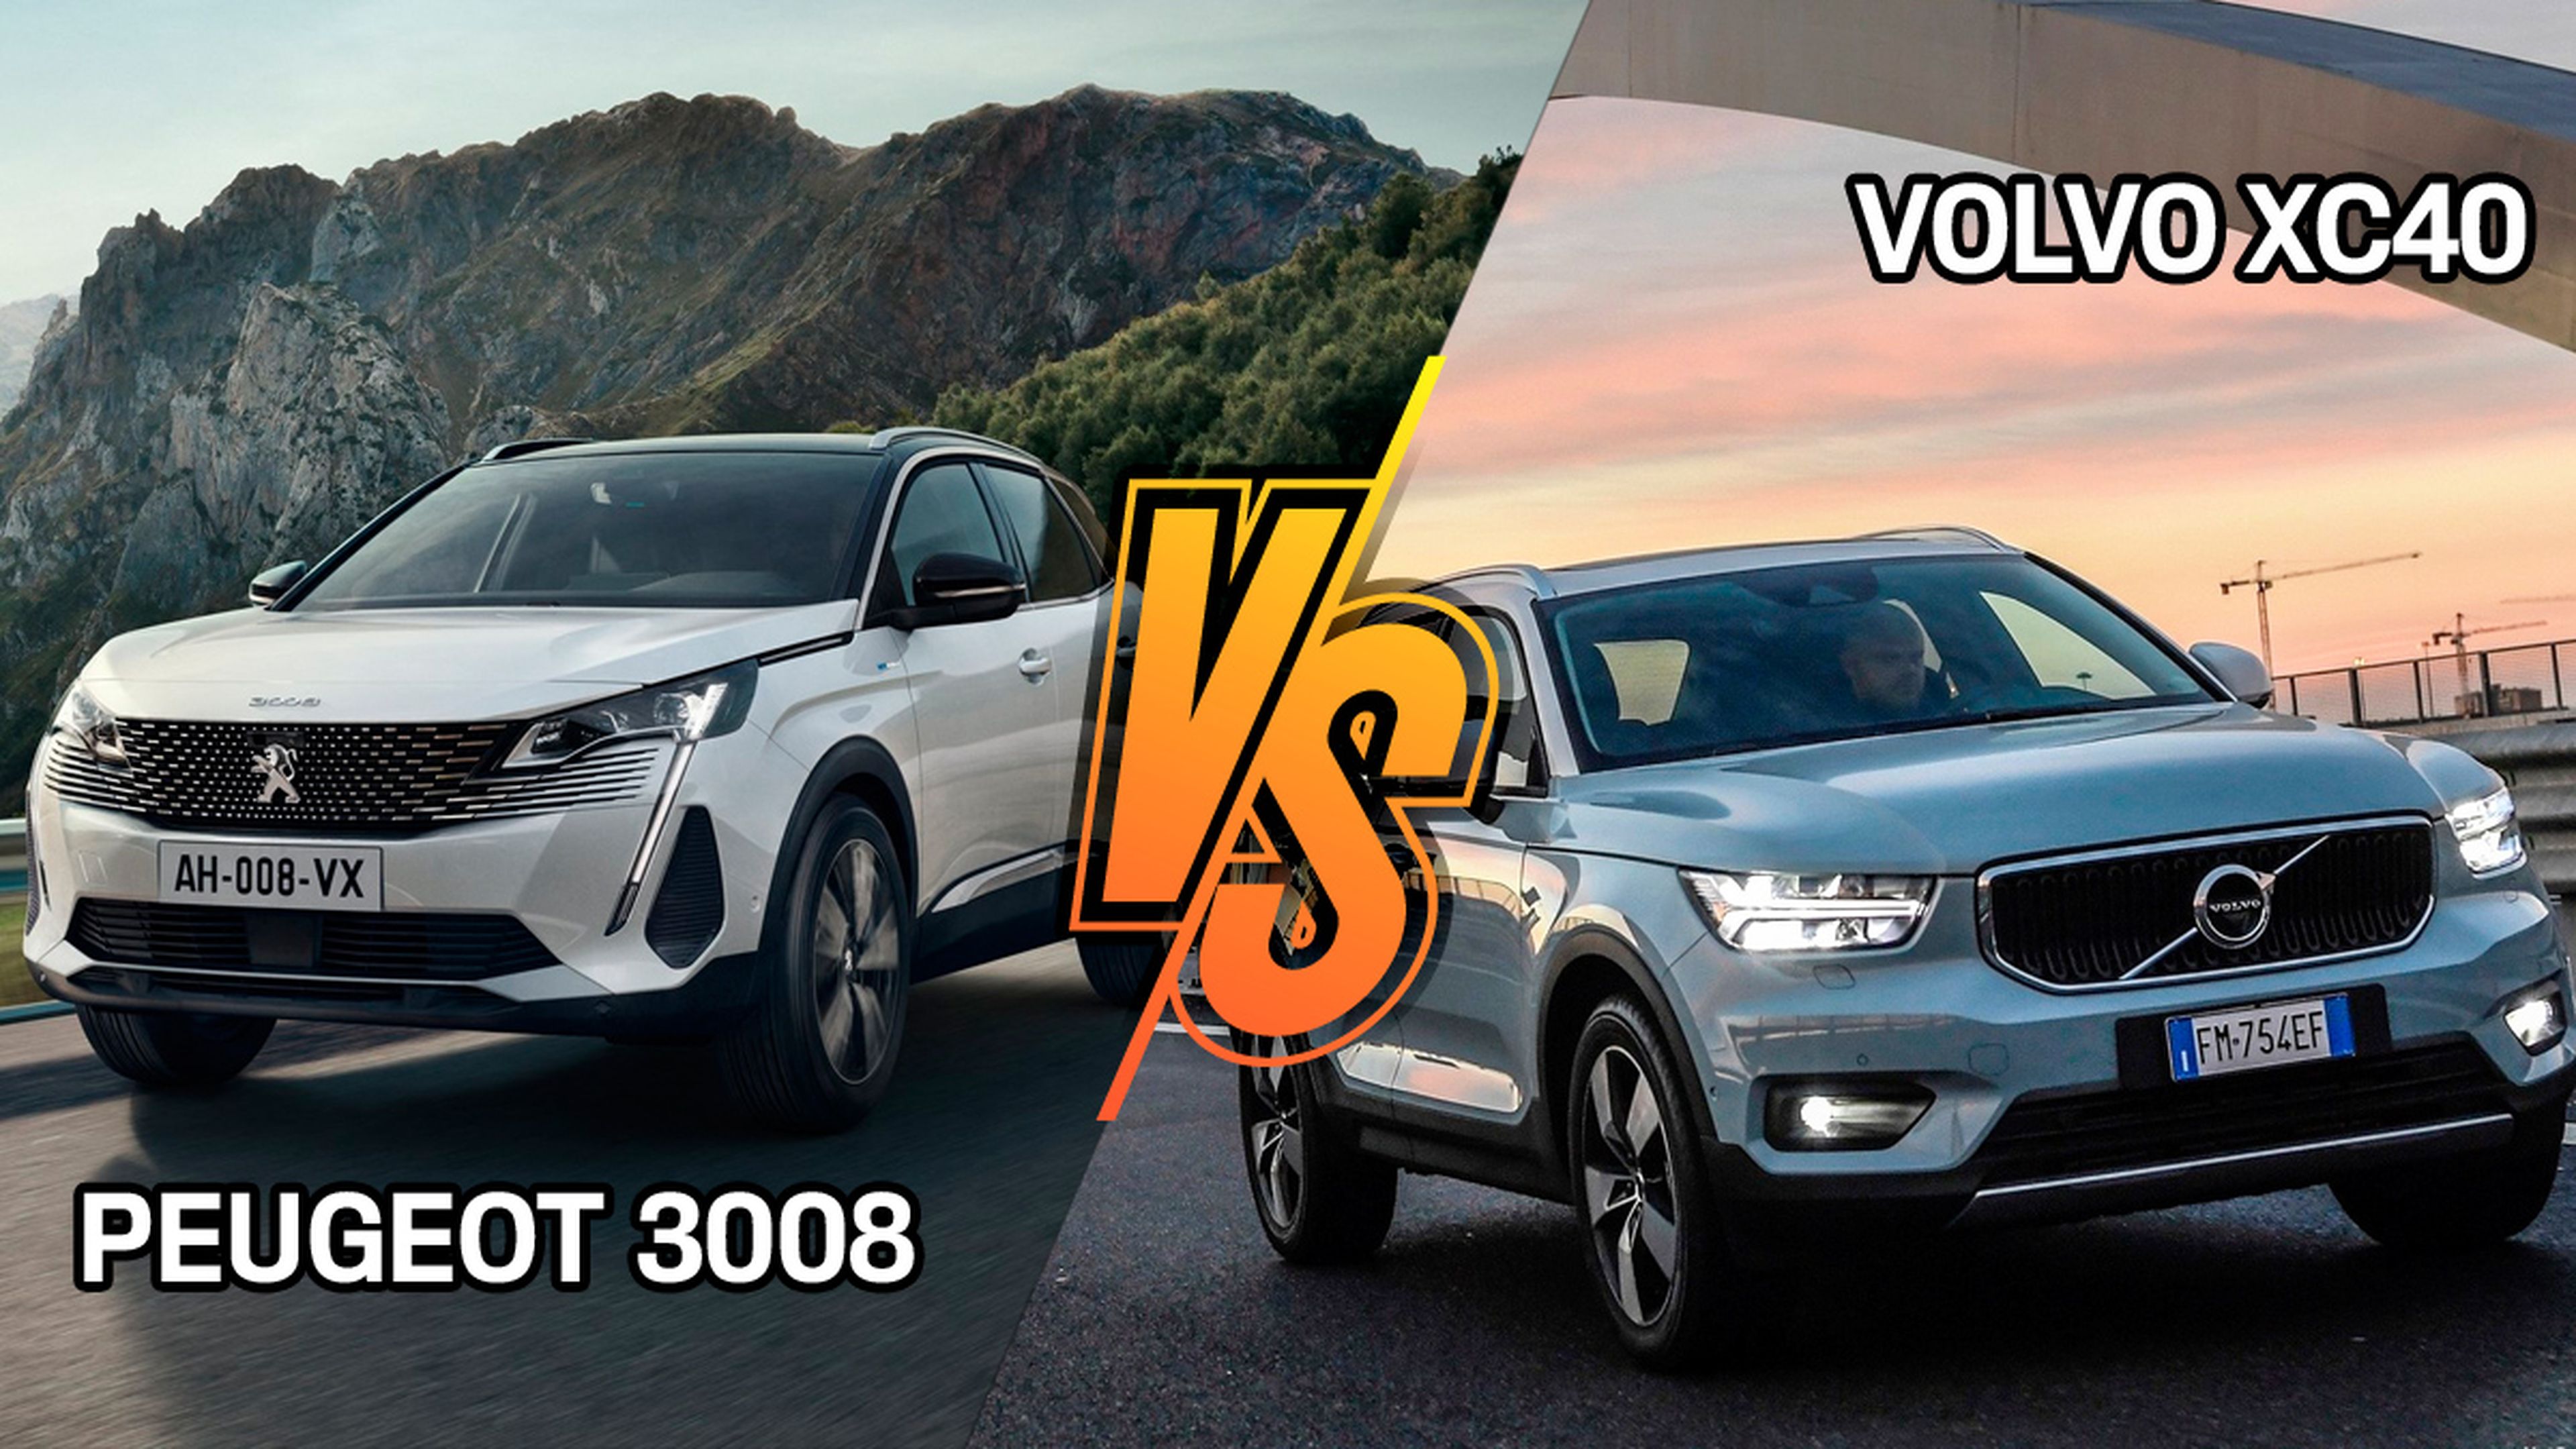 Peugeot 3008 2021 o Volvo XC40, ¿cuál es mejor?